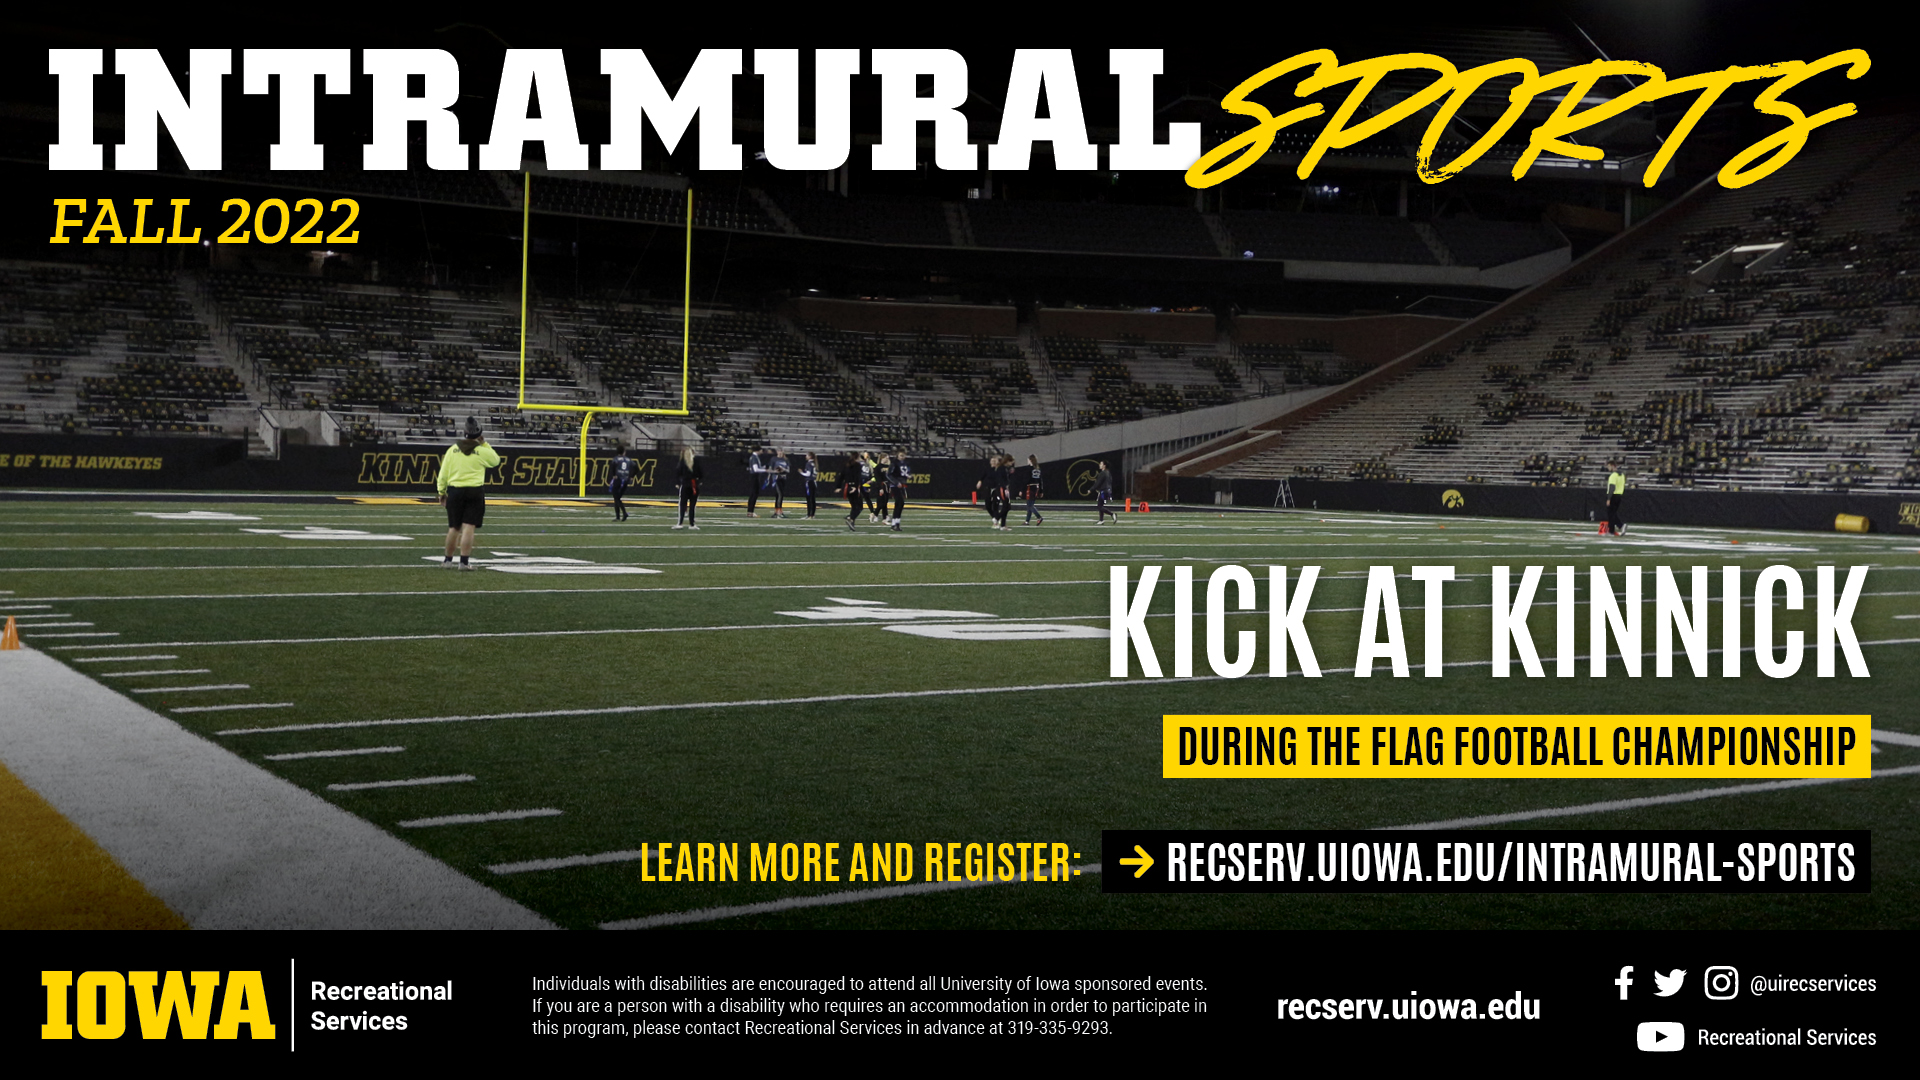 Intramural Sports Fall 2022: Kick at Kinnick. Learn more and register at reserv.uiowa.edu/intramural-sports